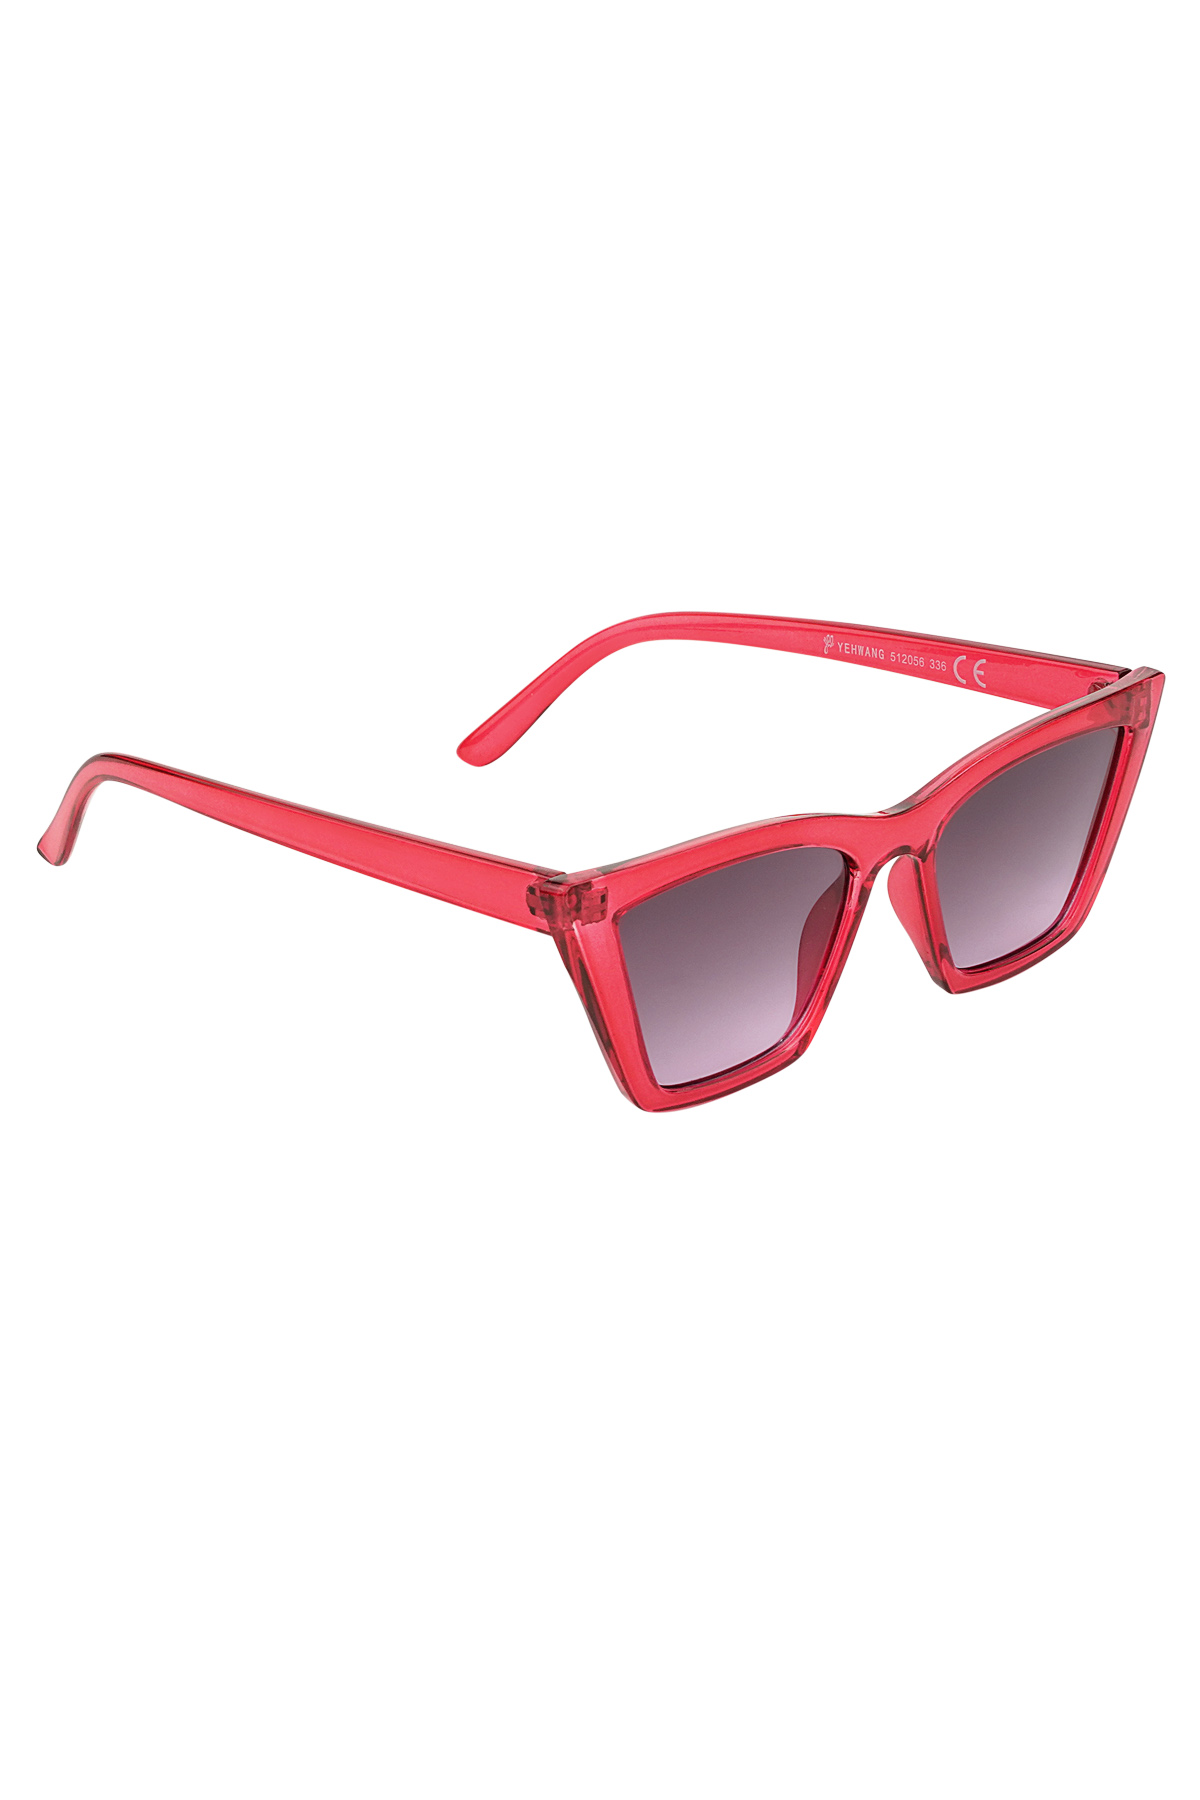 Monochrome cat eye sunglasses - red